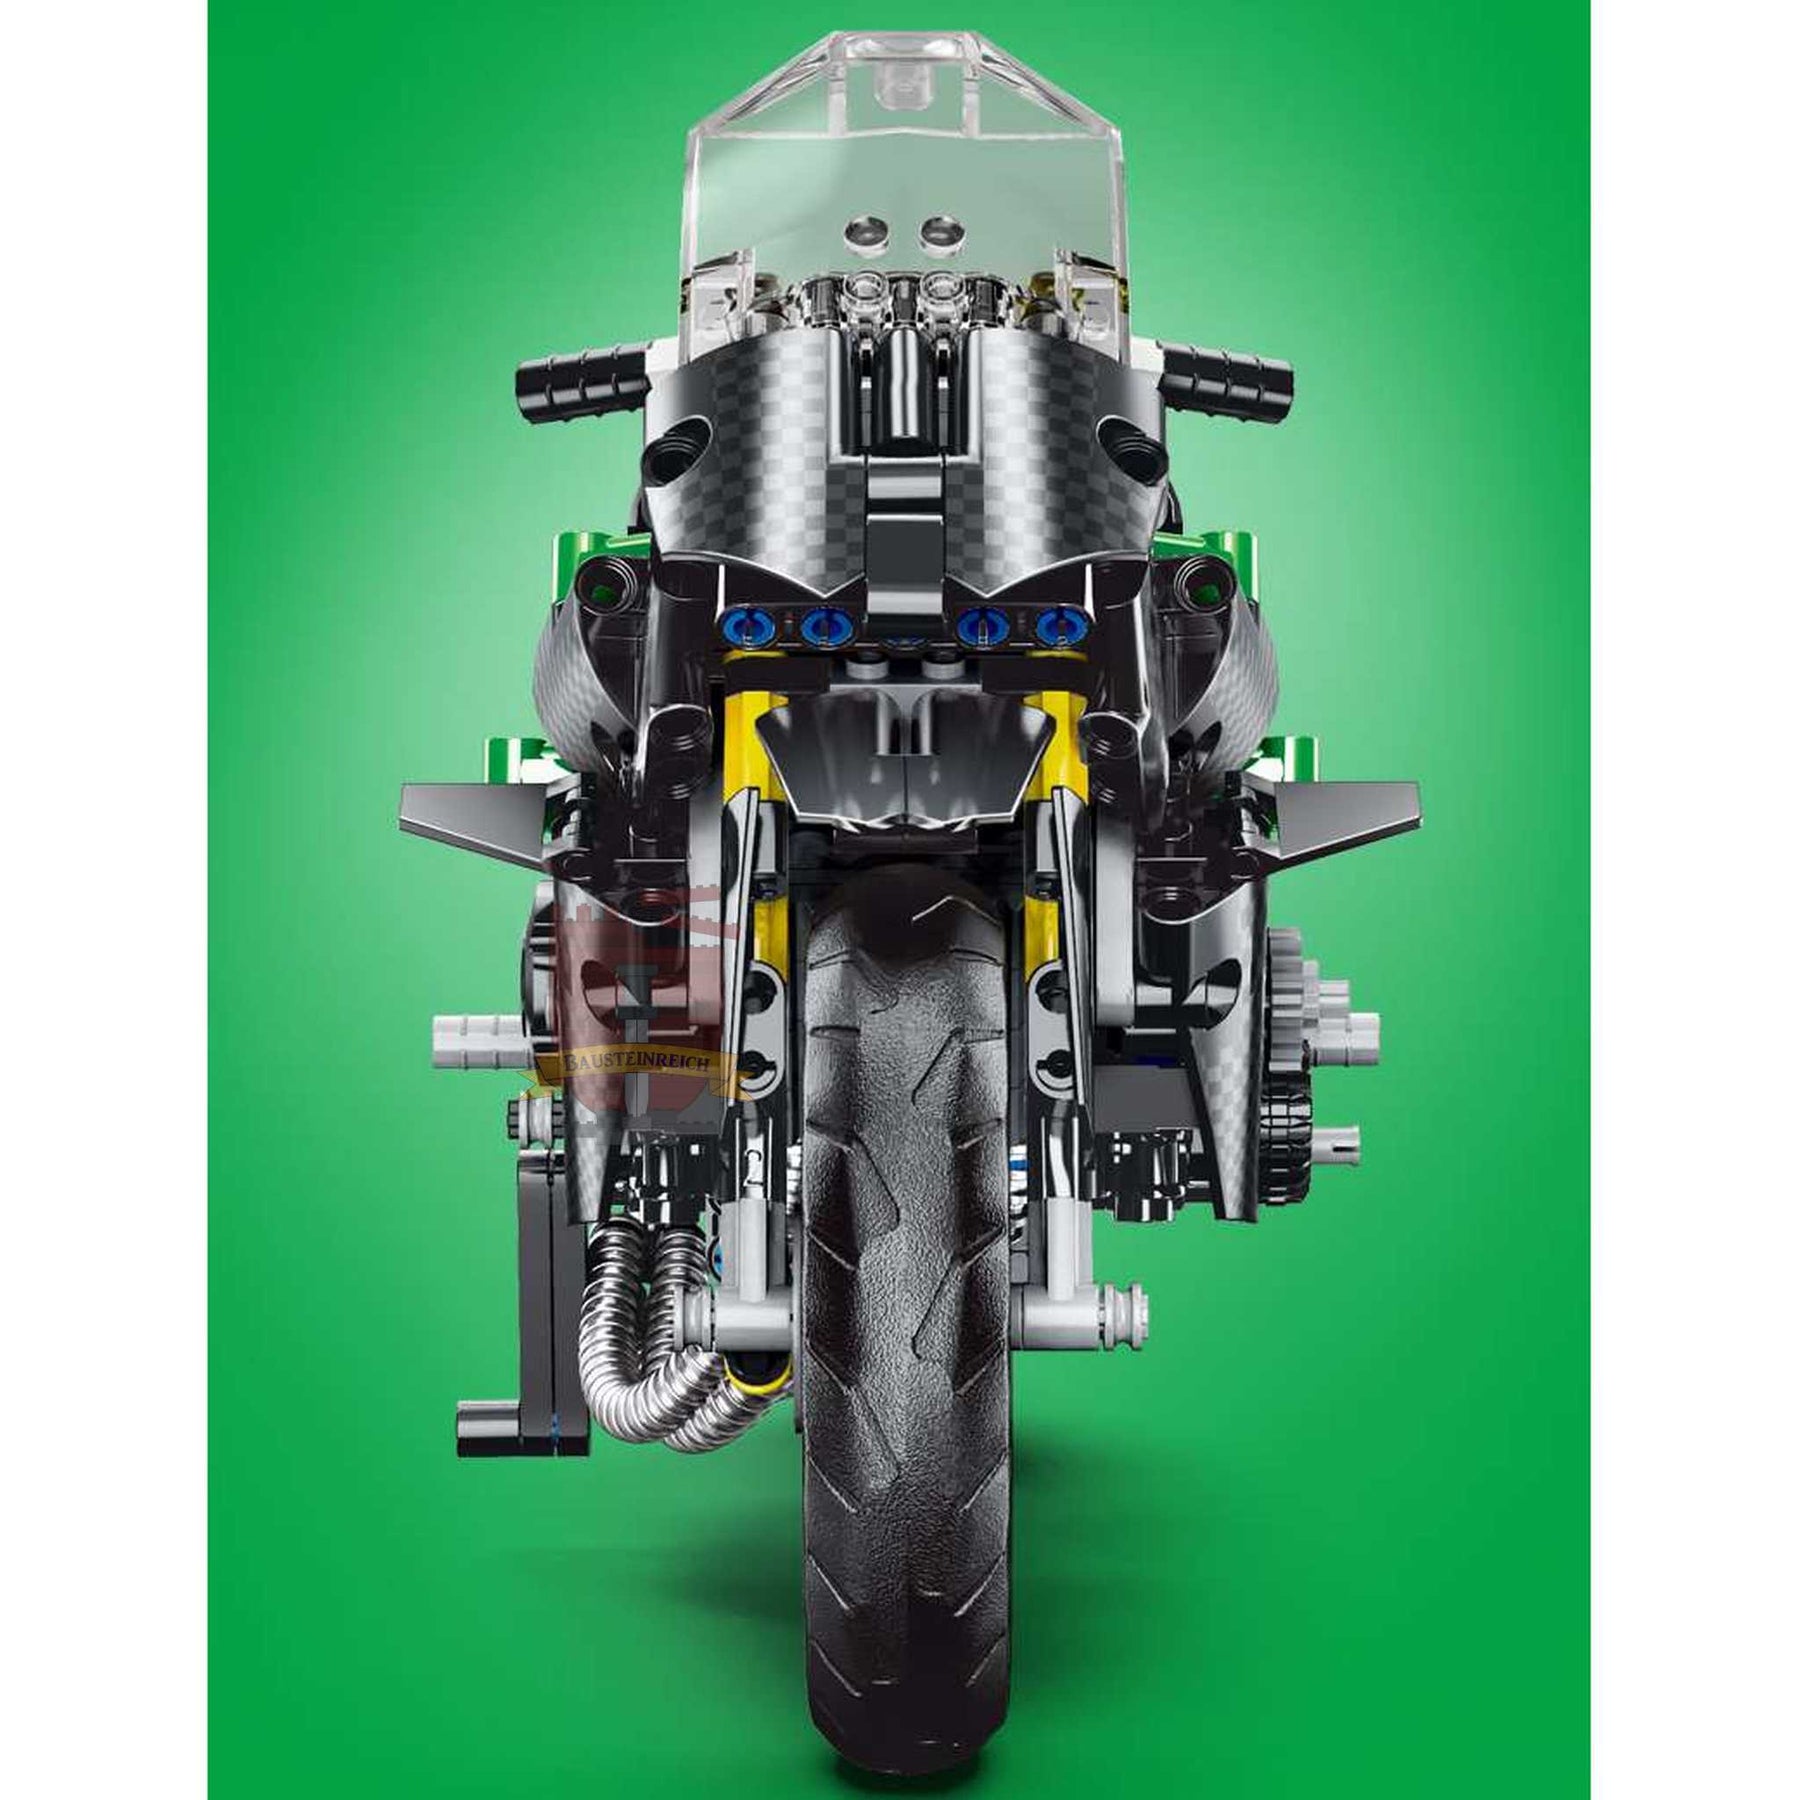 23002-Motorrad HZ-R-Mouldking